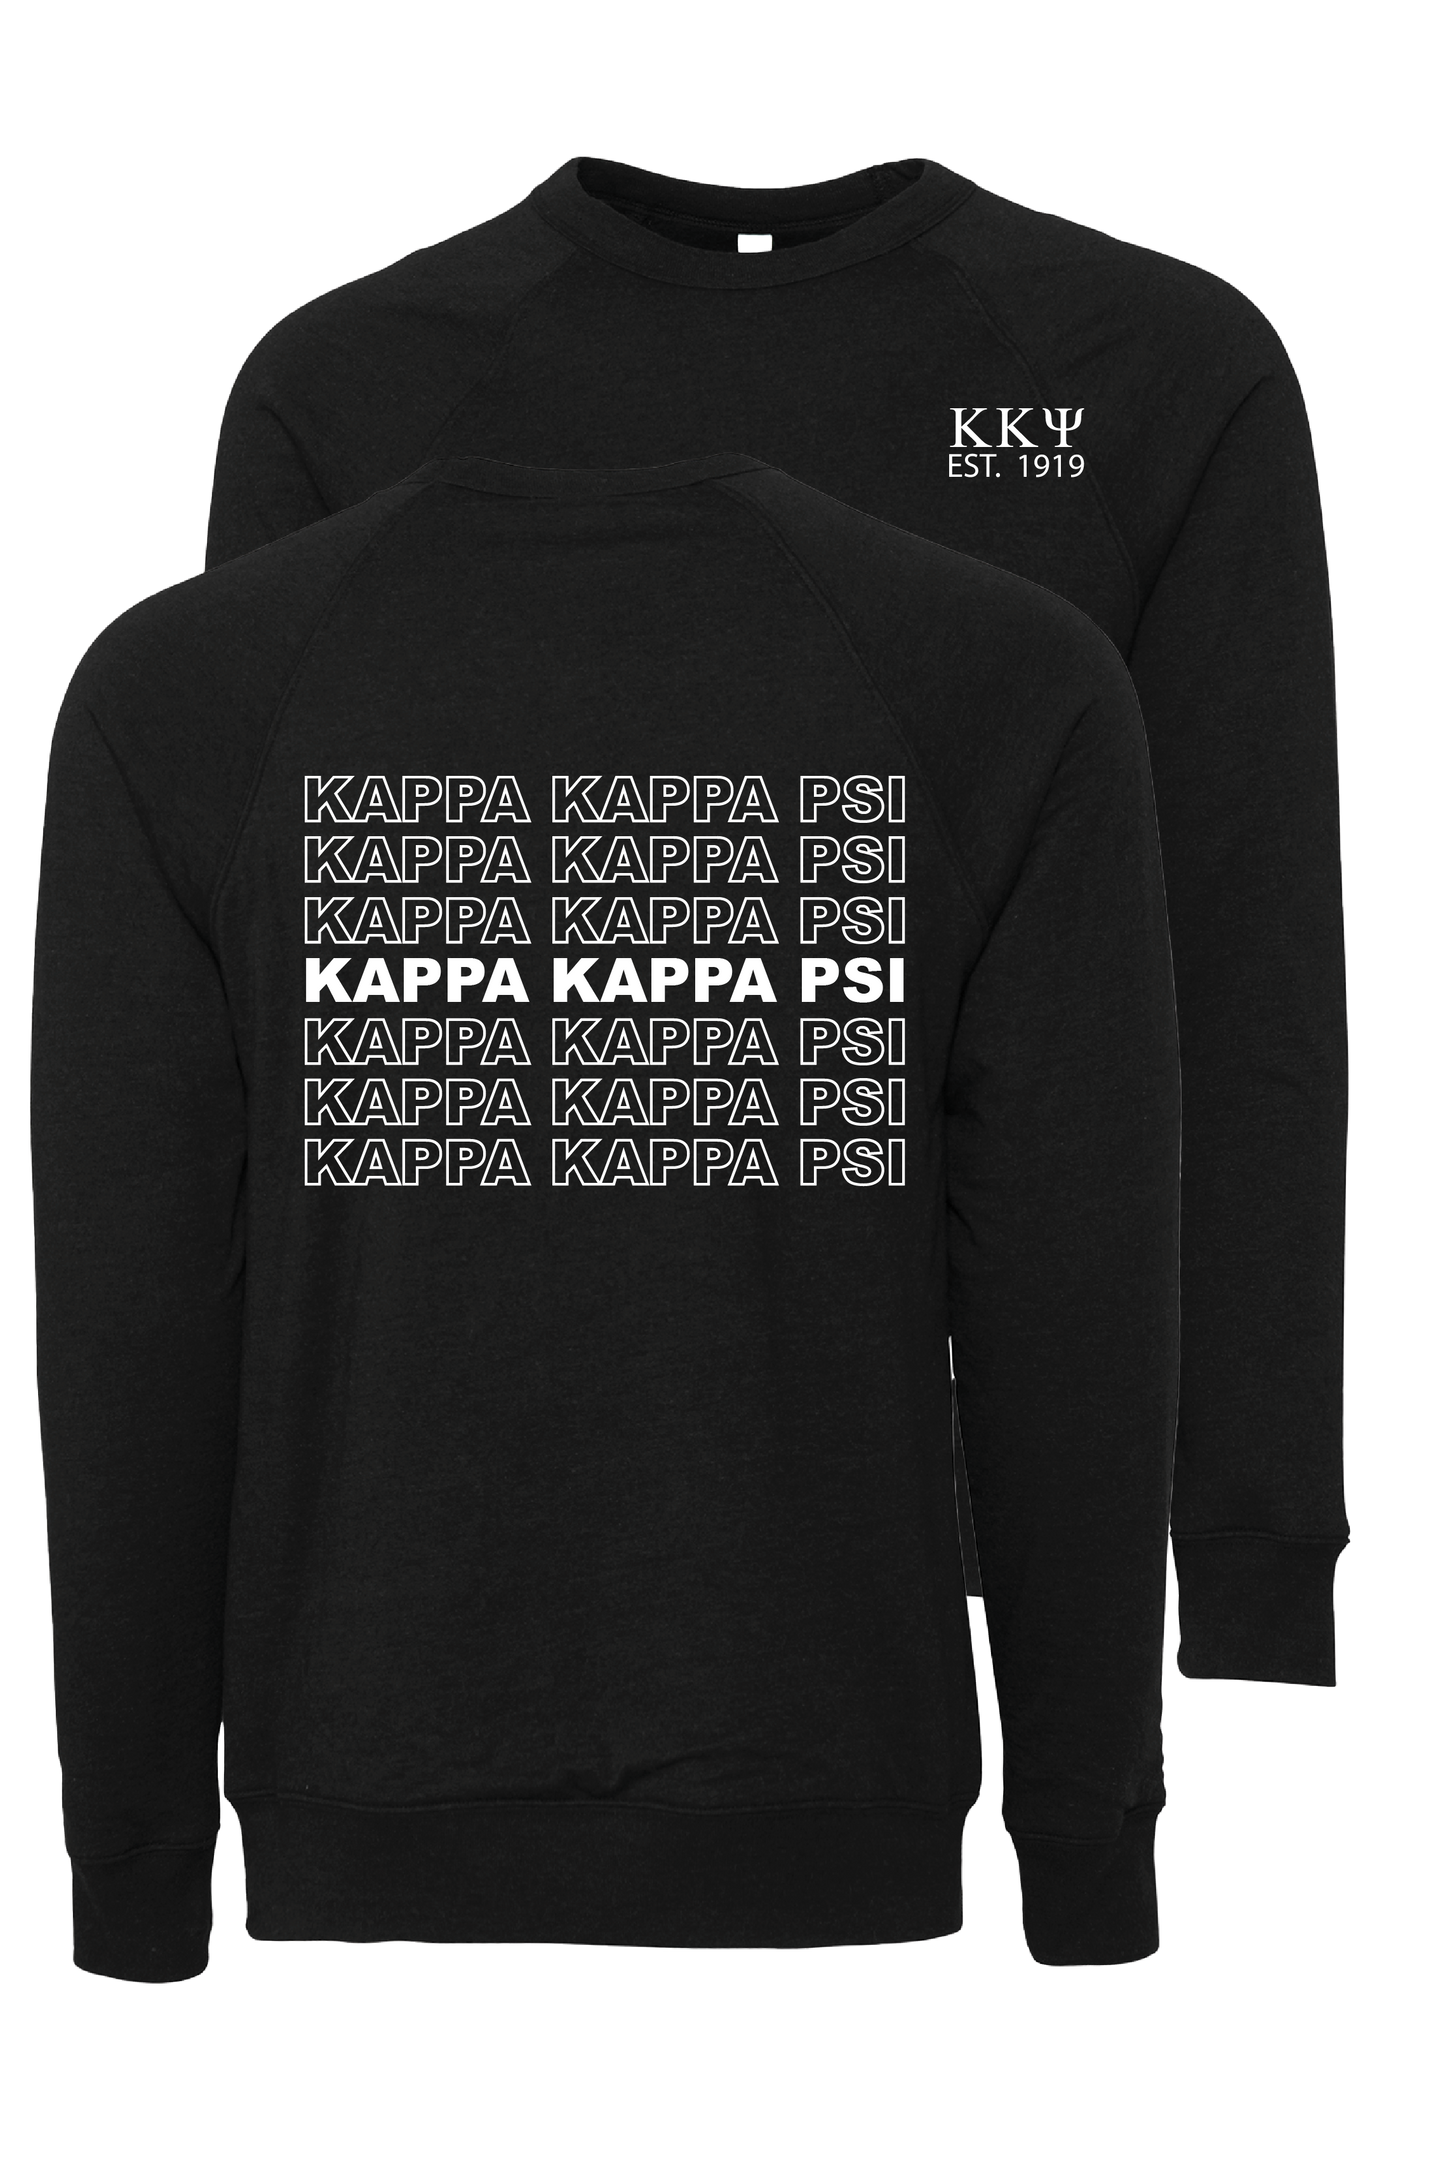 Kappa Kappa Psi Repeating Name Crewneck Sweatshirts